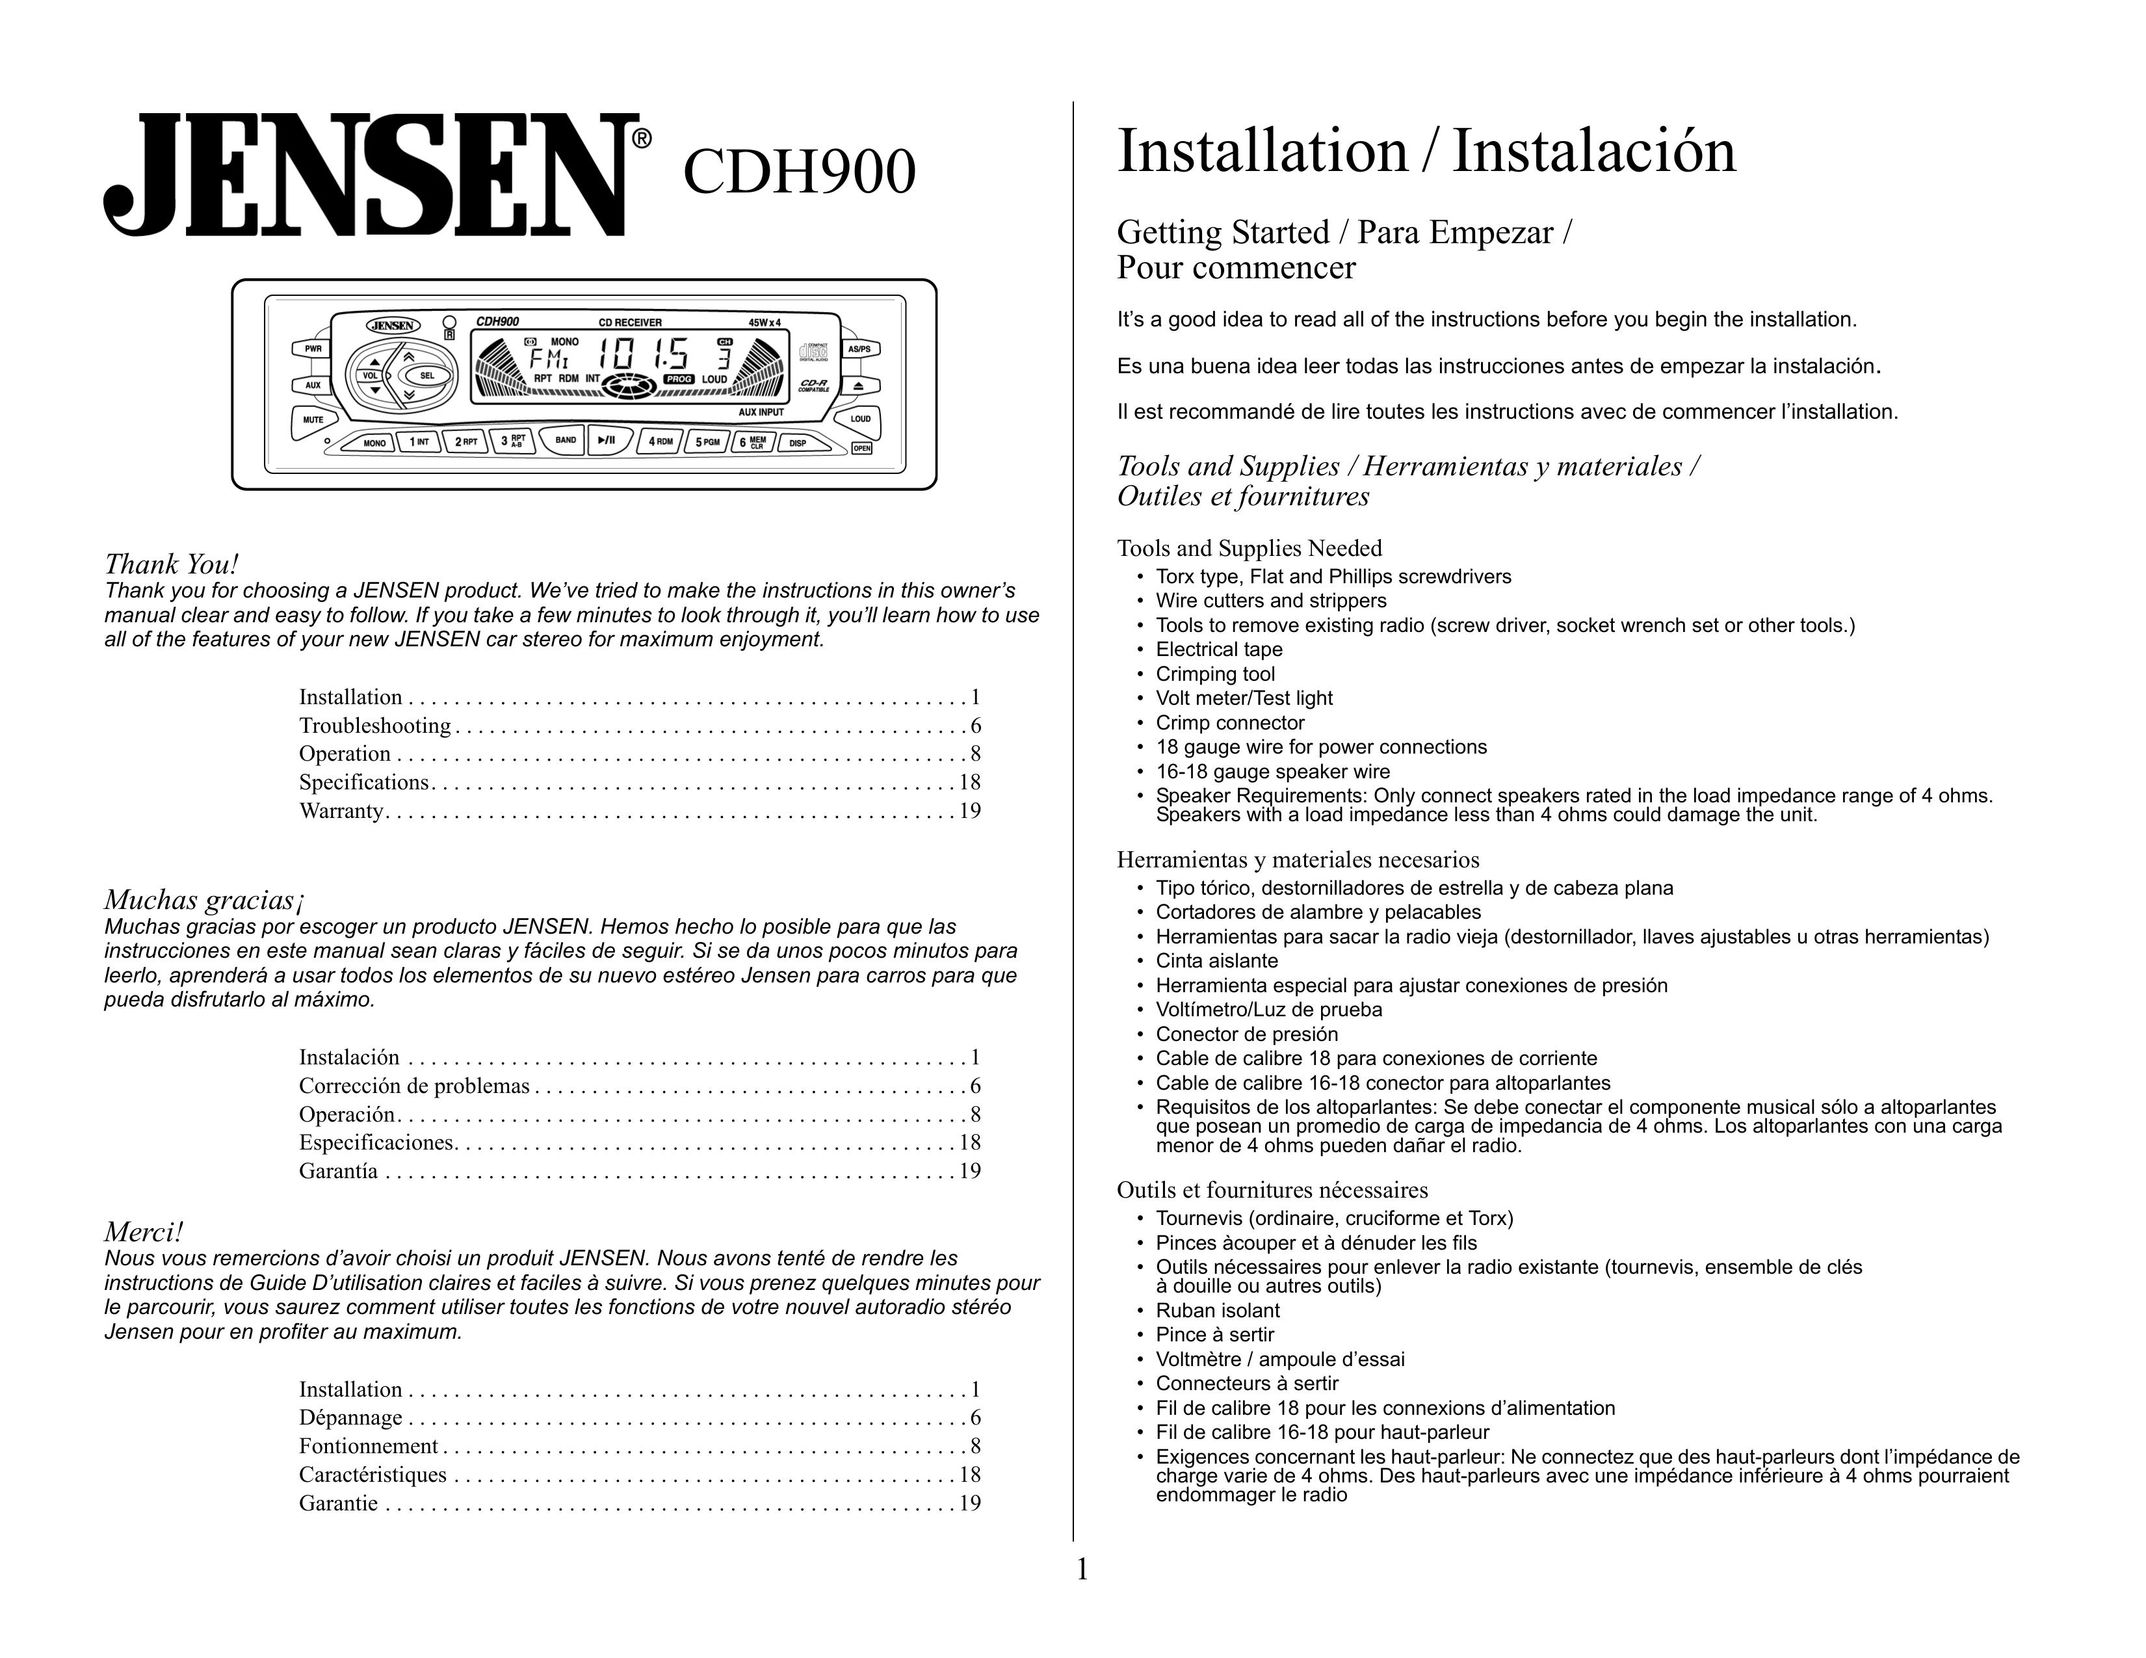 Jensen Tools CDH900 Car Stereo System User Manual